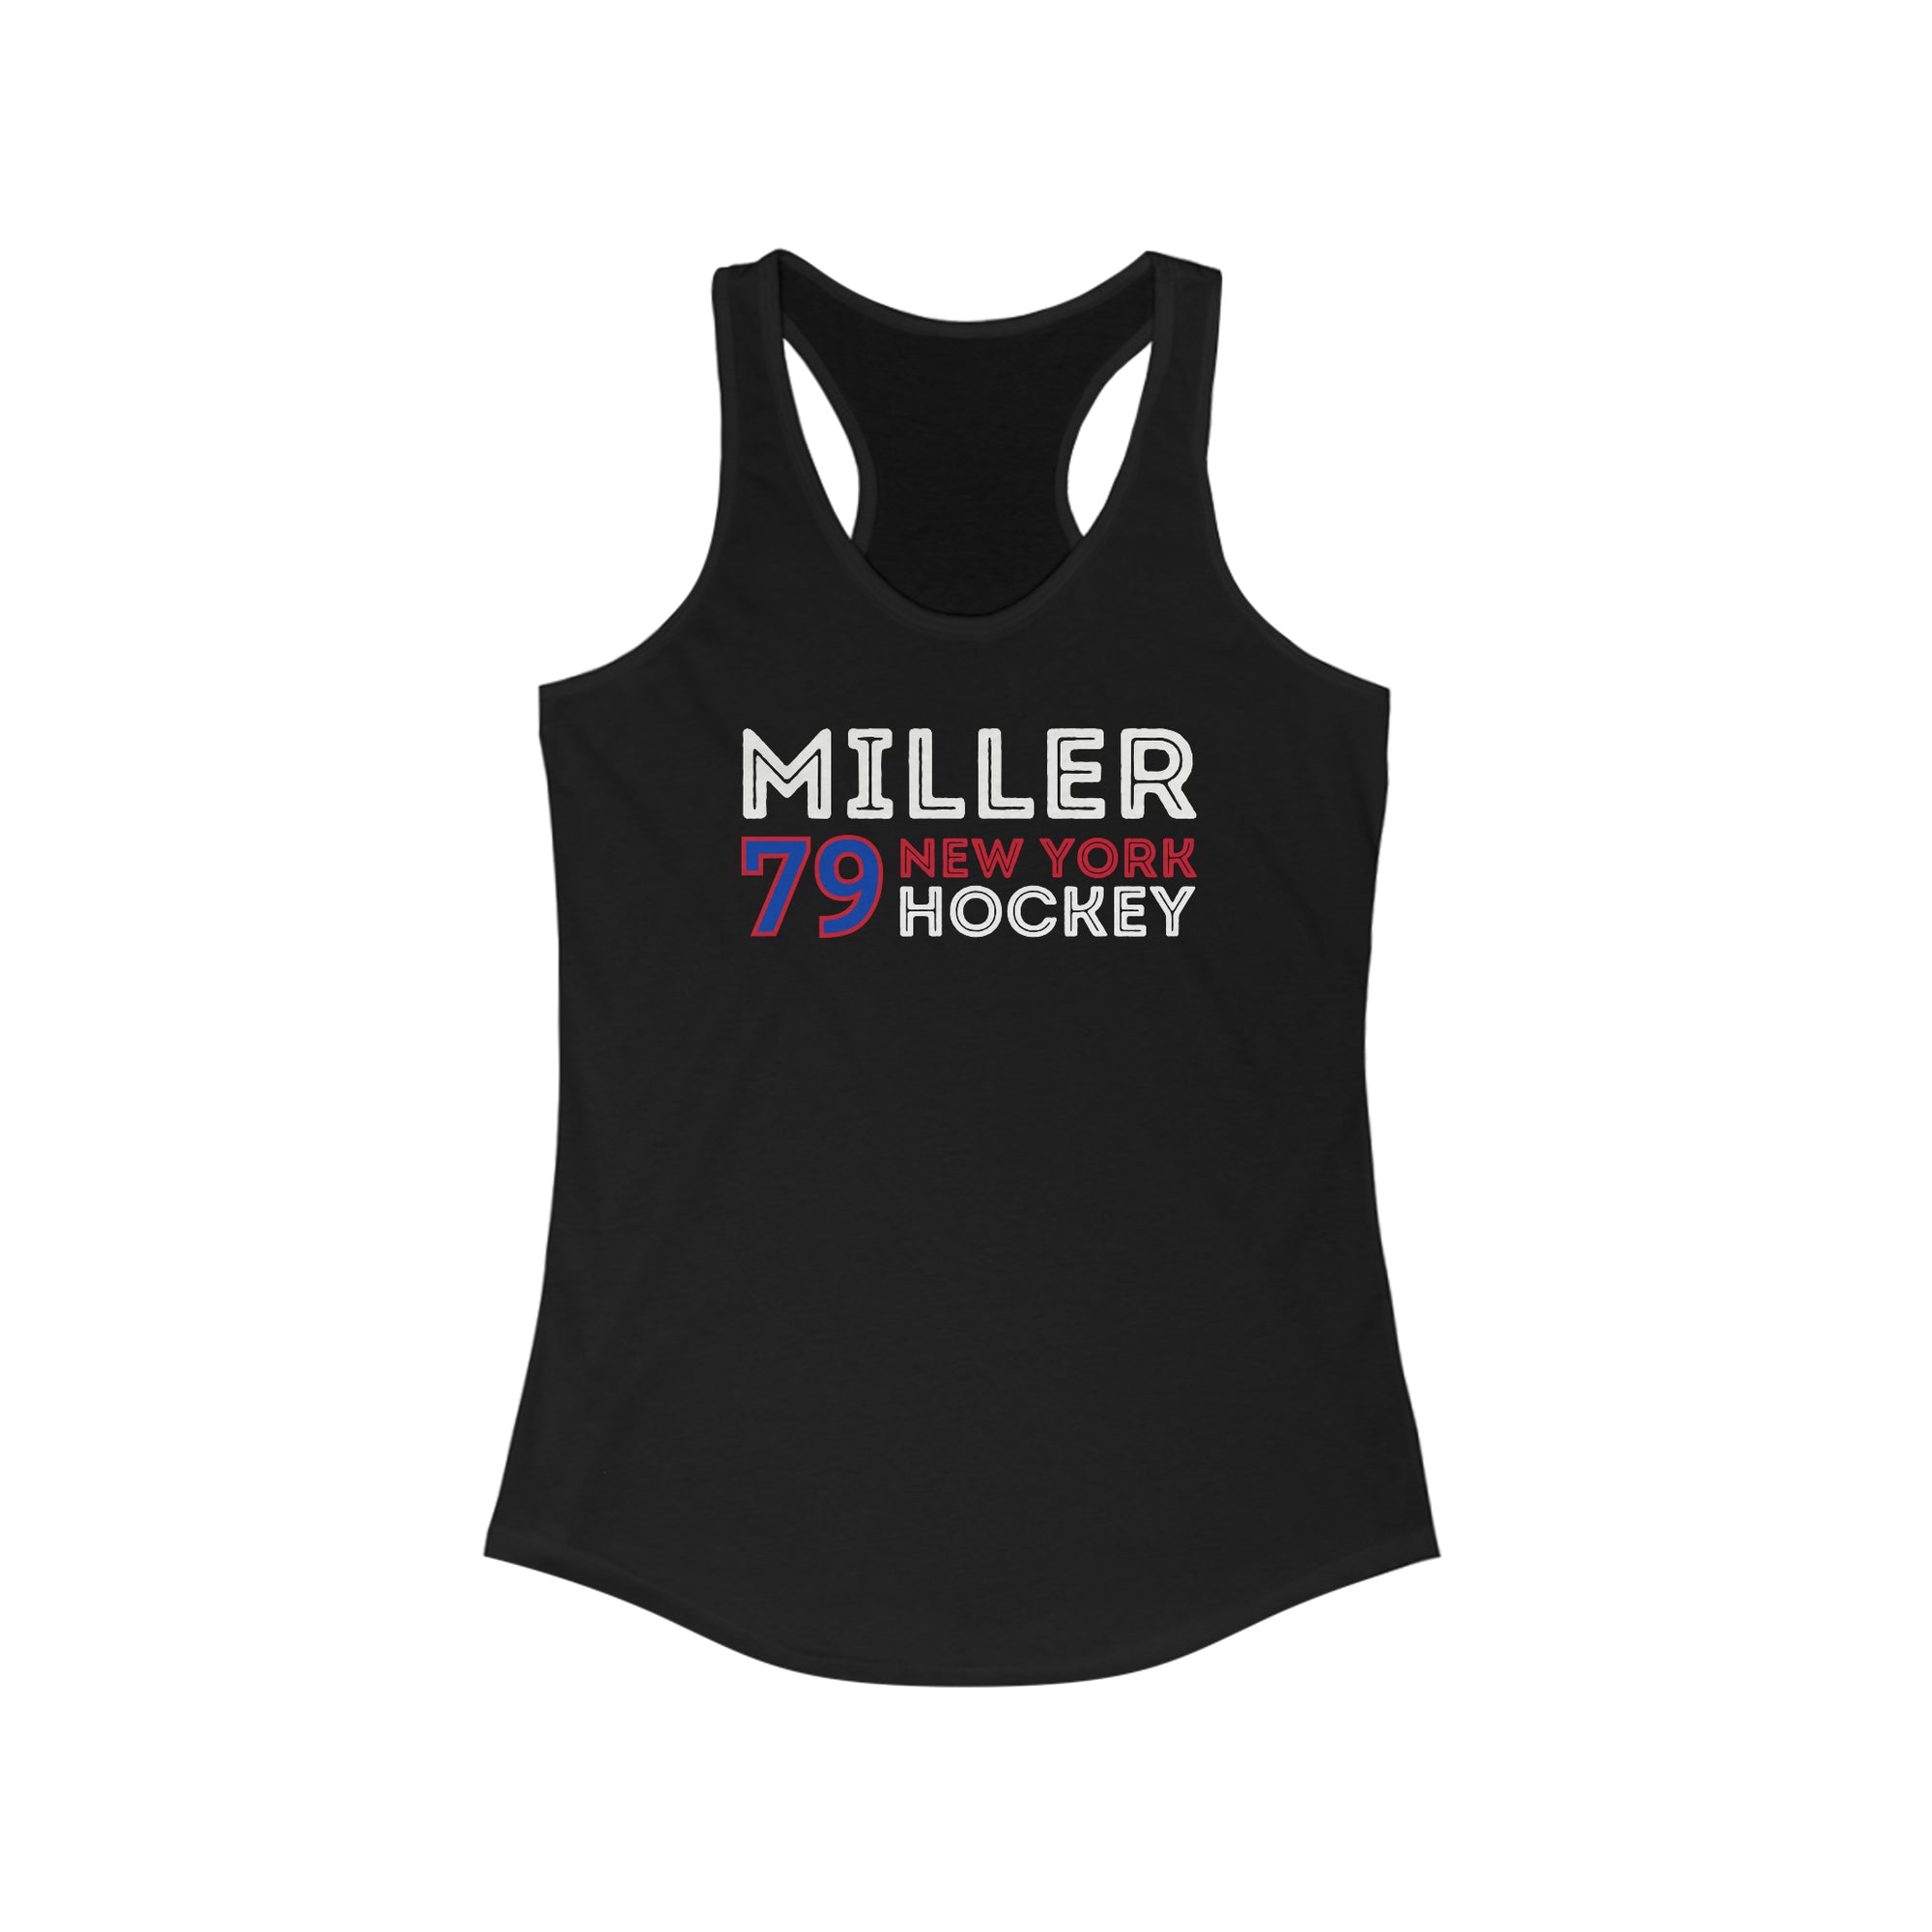 Miller 79 New York Hockey Grafitti Wall Design Women's Ideal Racerback Tank Top